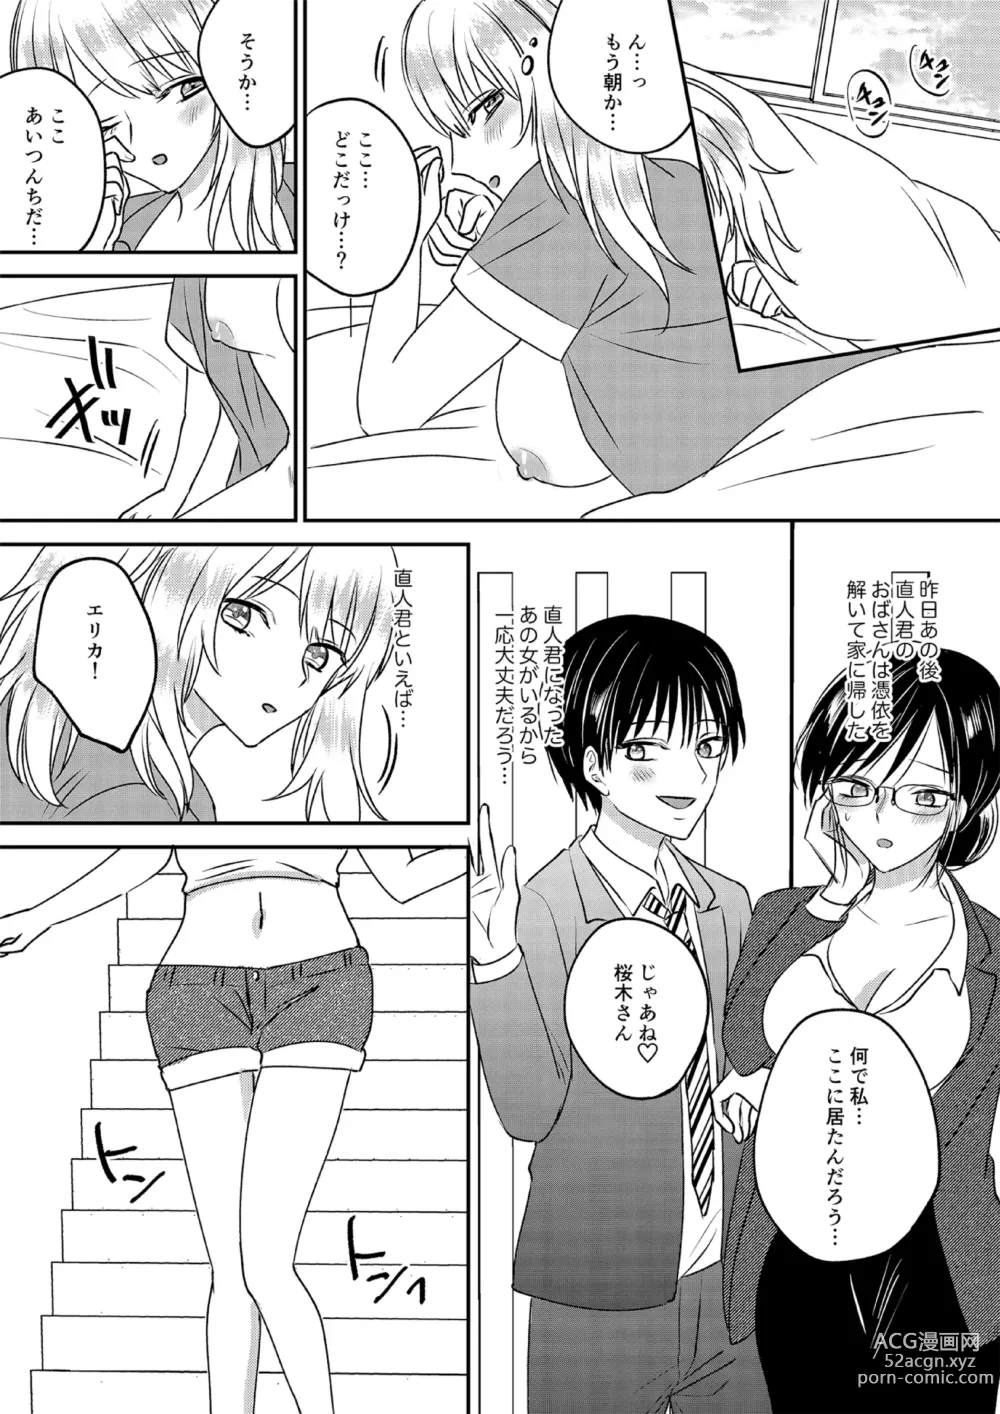 Page 27 of doujinshi Irekawari Cinderella 3